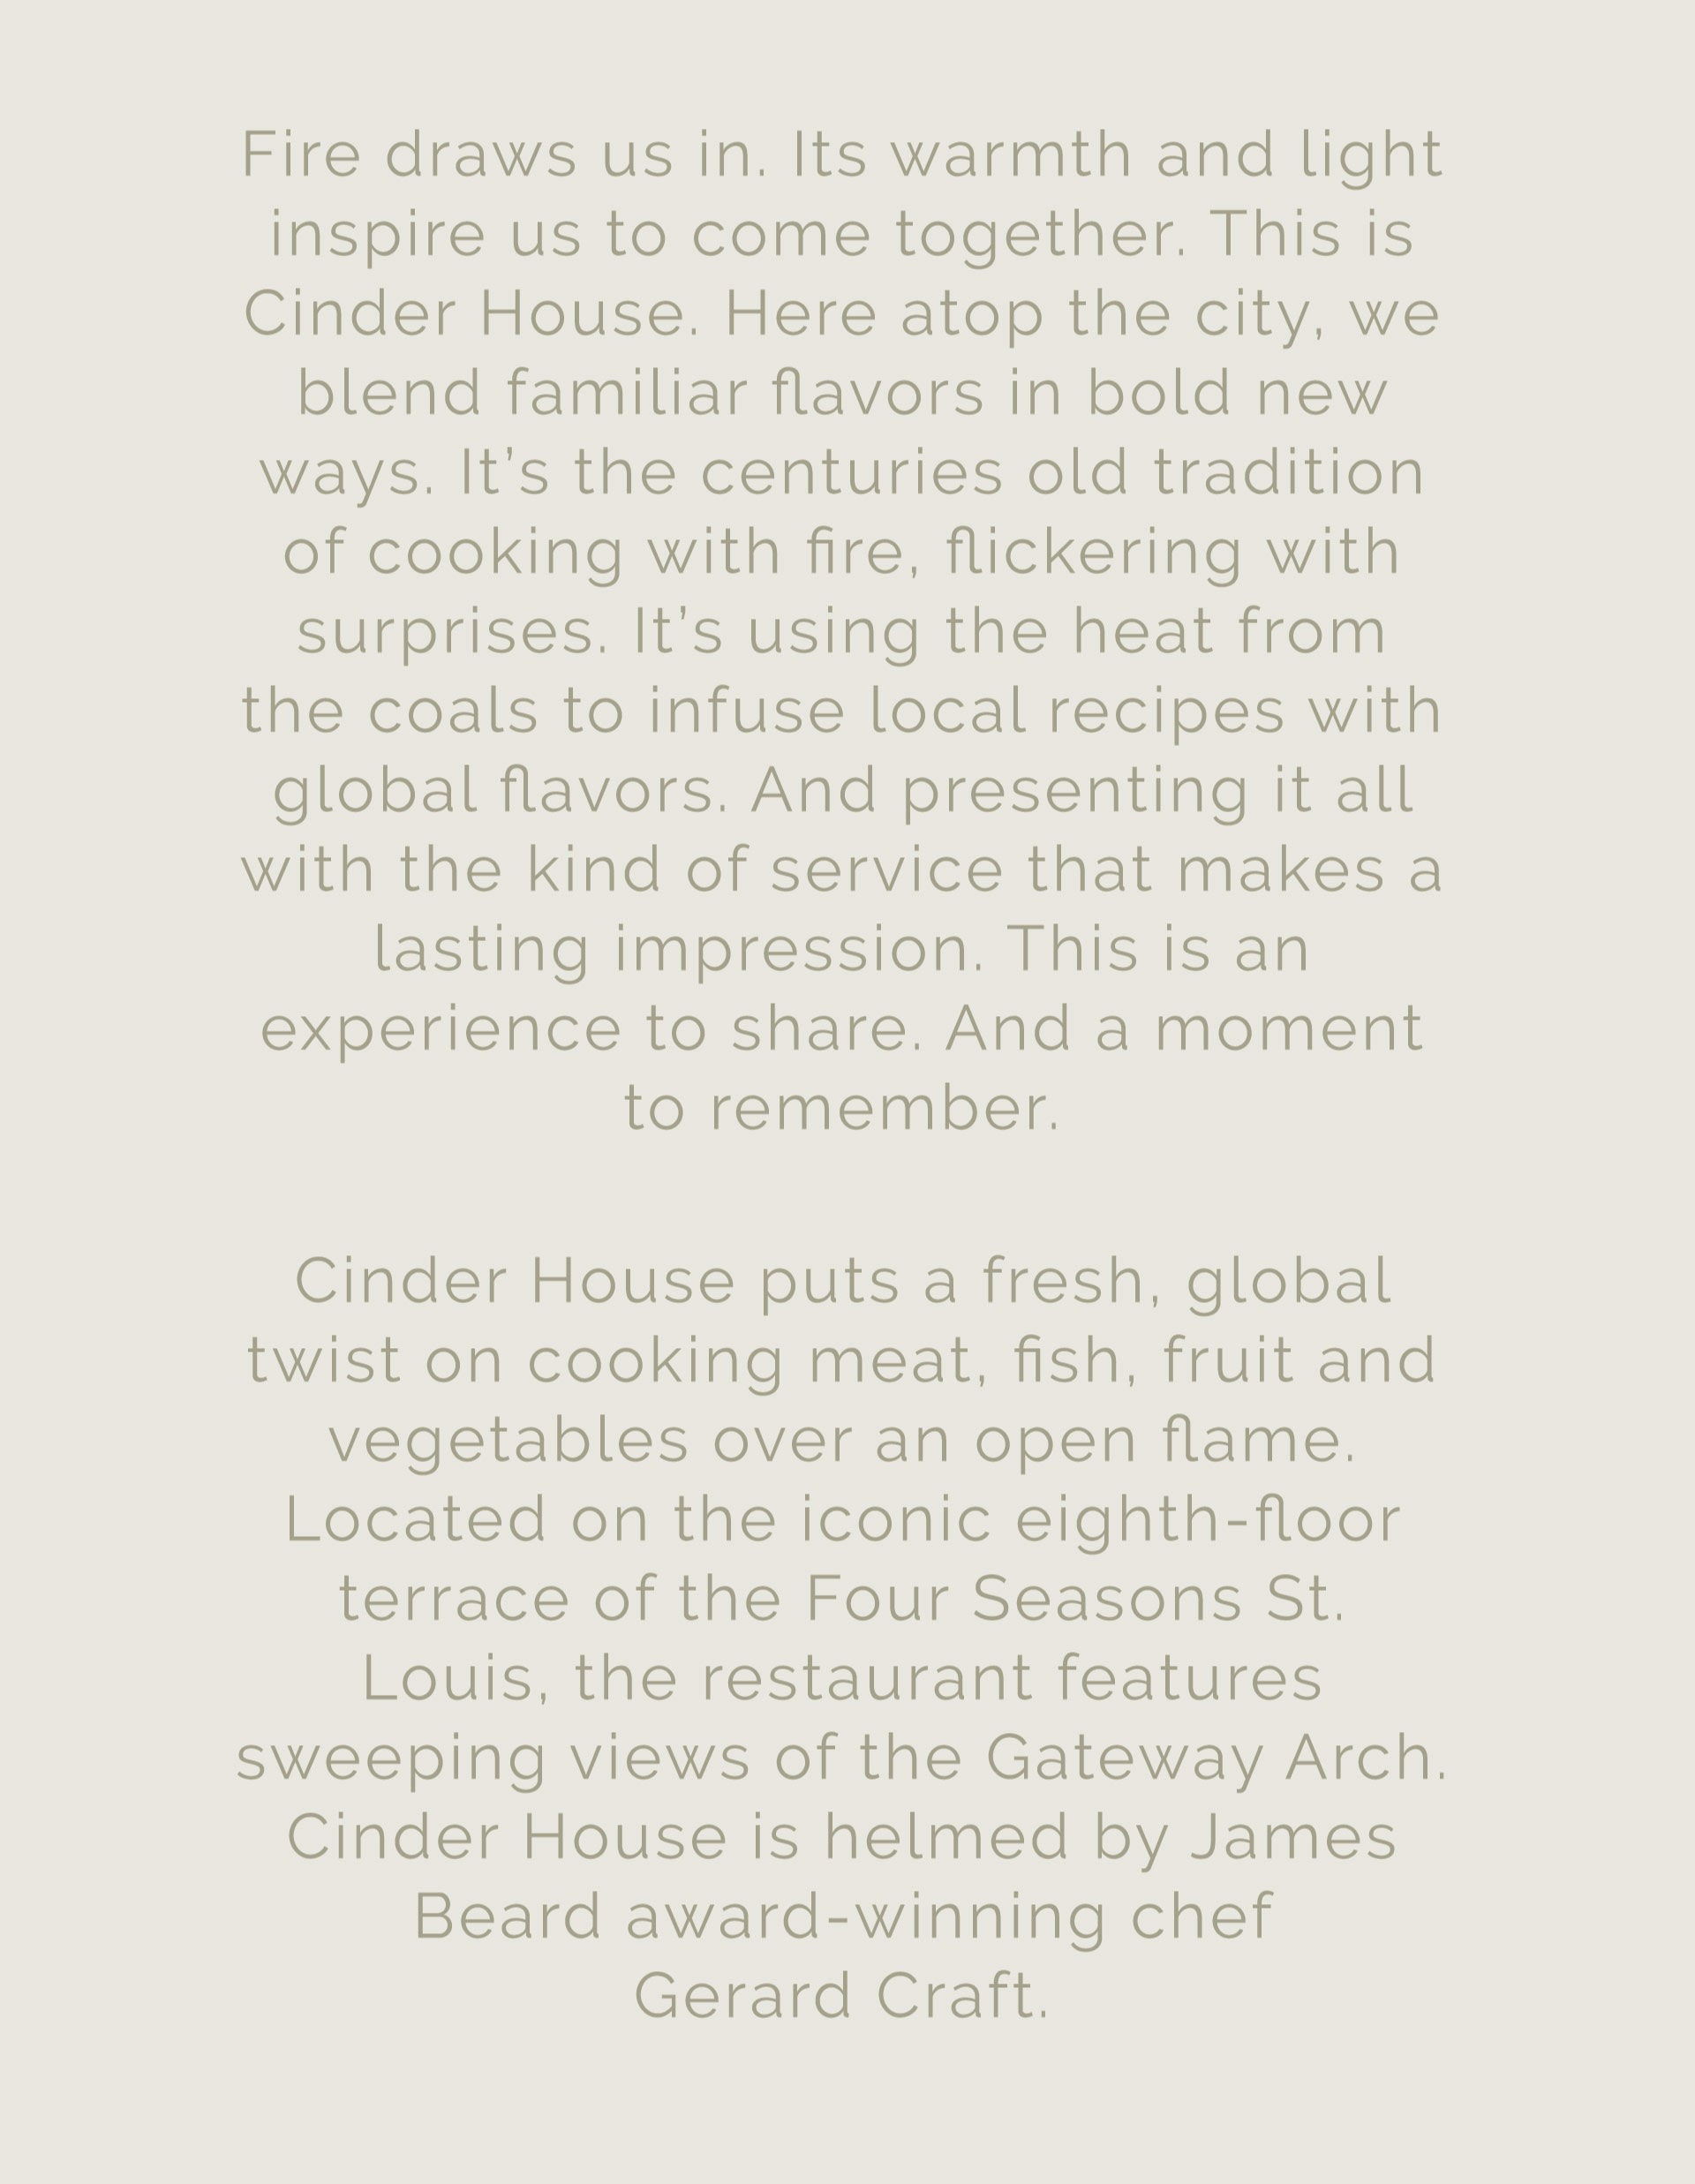 Brand Narrative for Cinder House